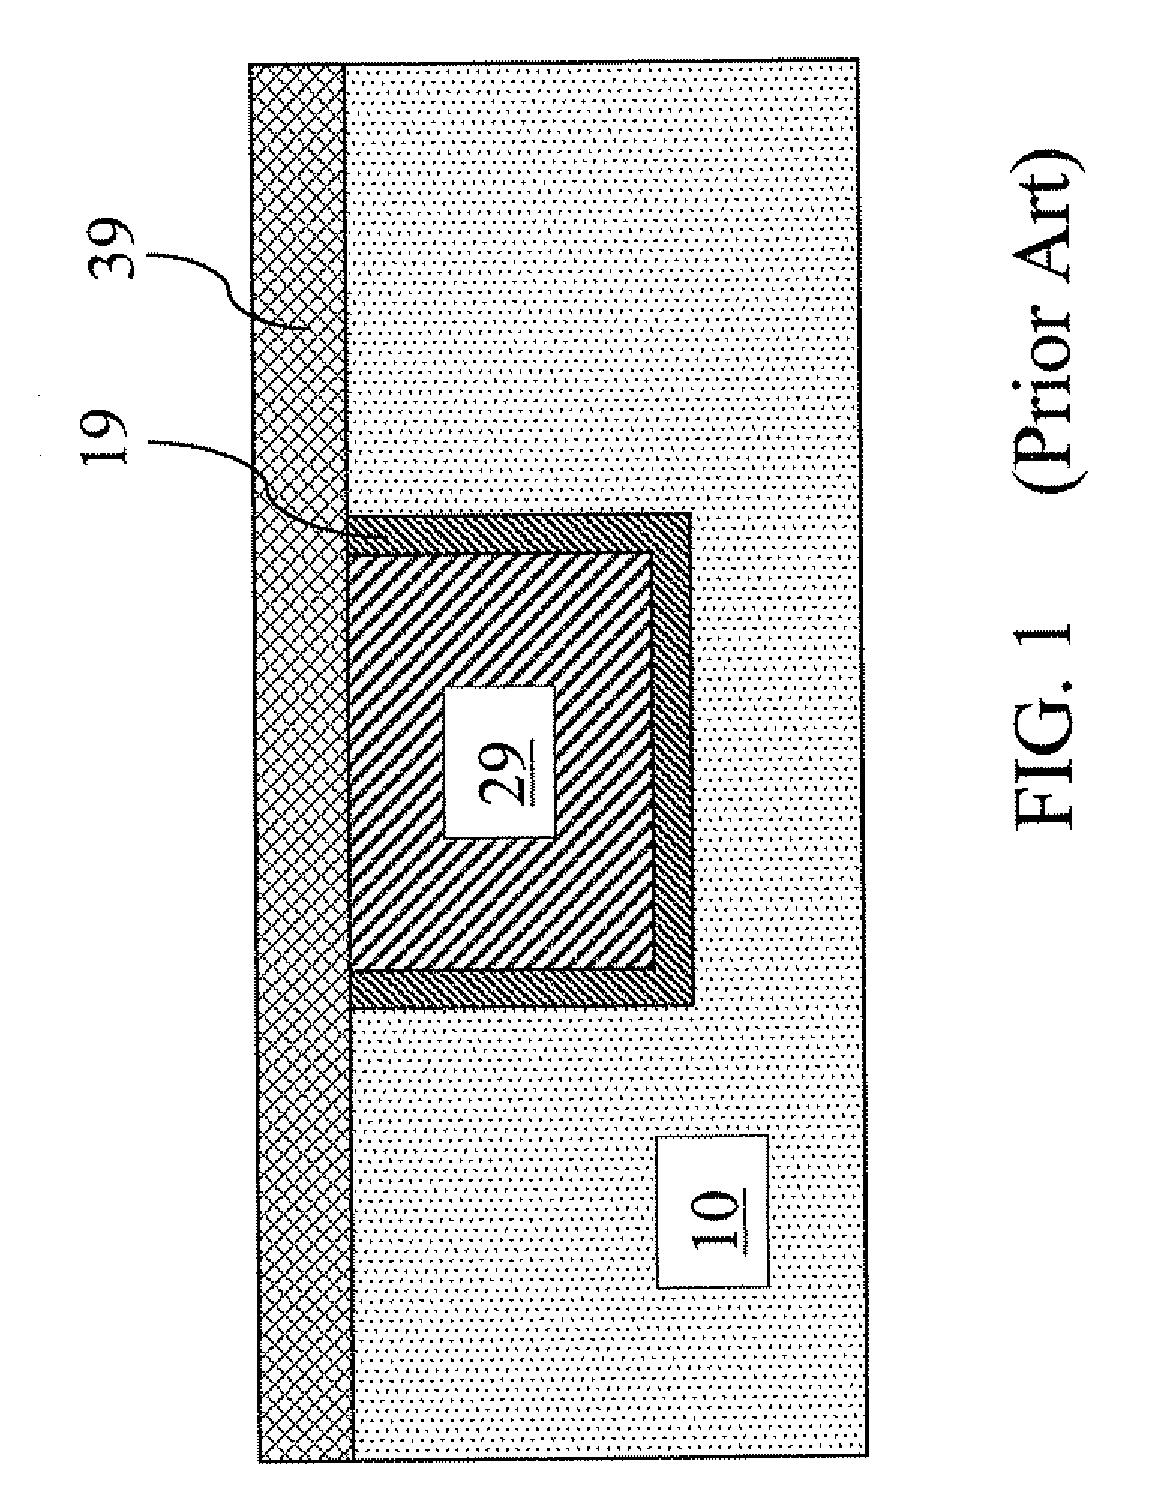 Electromigration resistant interconnect structure